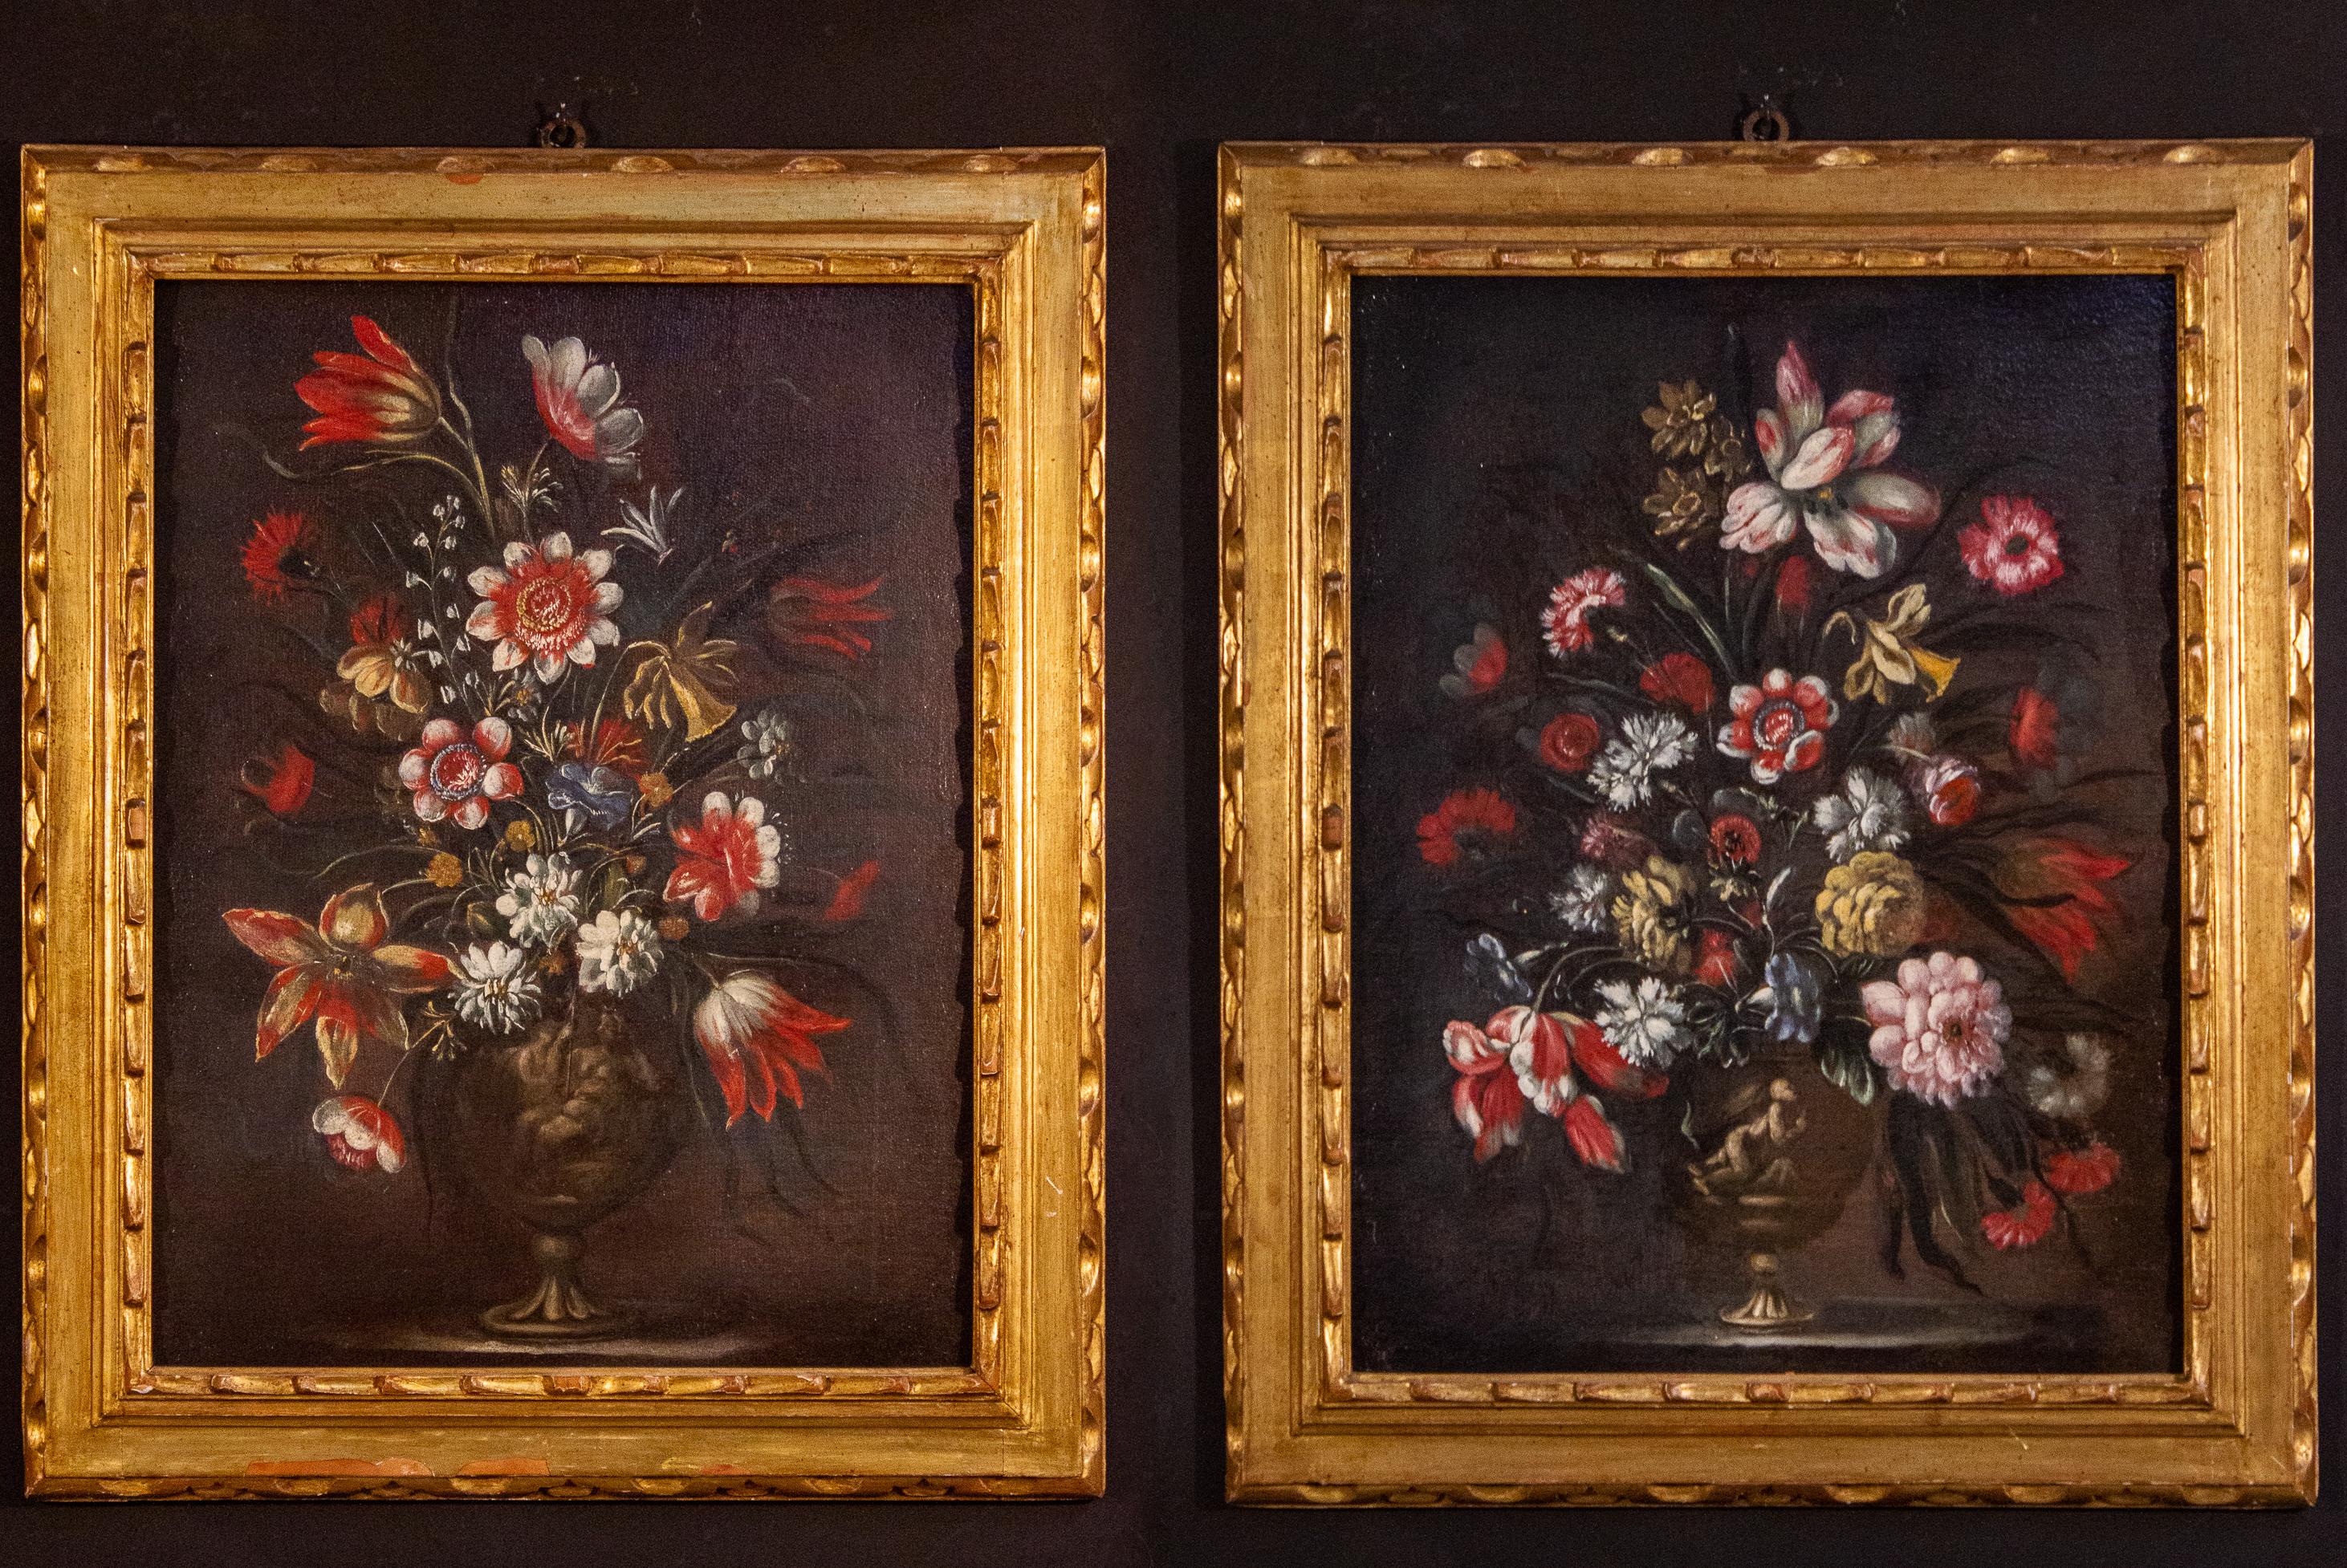 18th century flowers